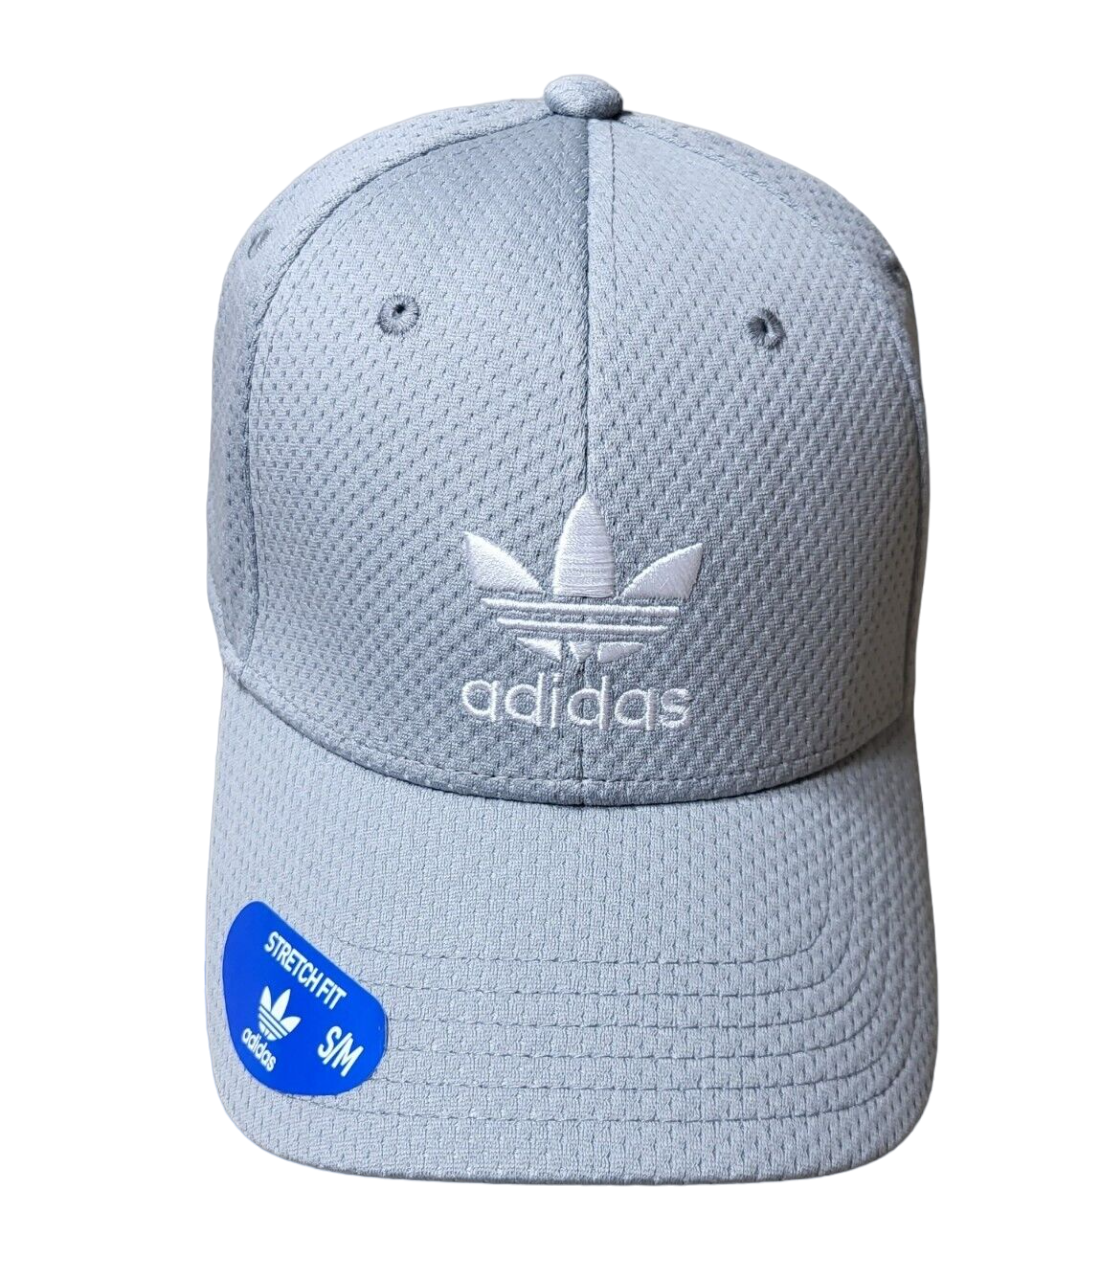 Adidas Men's Trefoil Logo Zig Stretch Fit Baseball Golf Cap5150905A